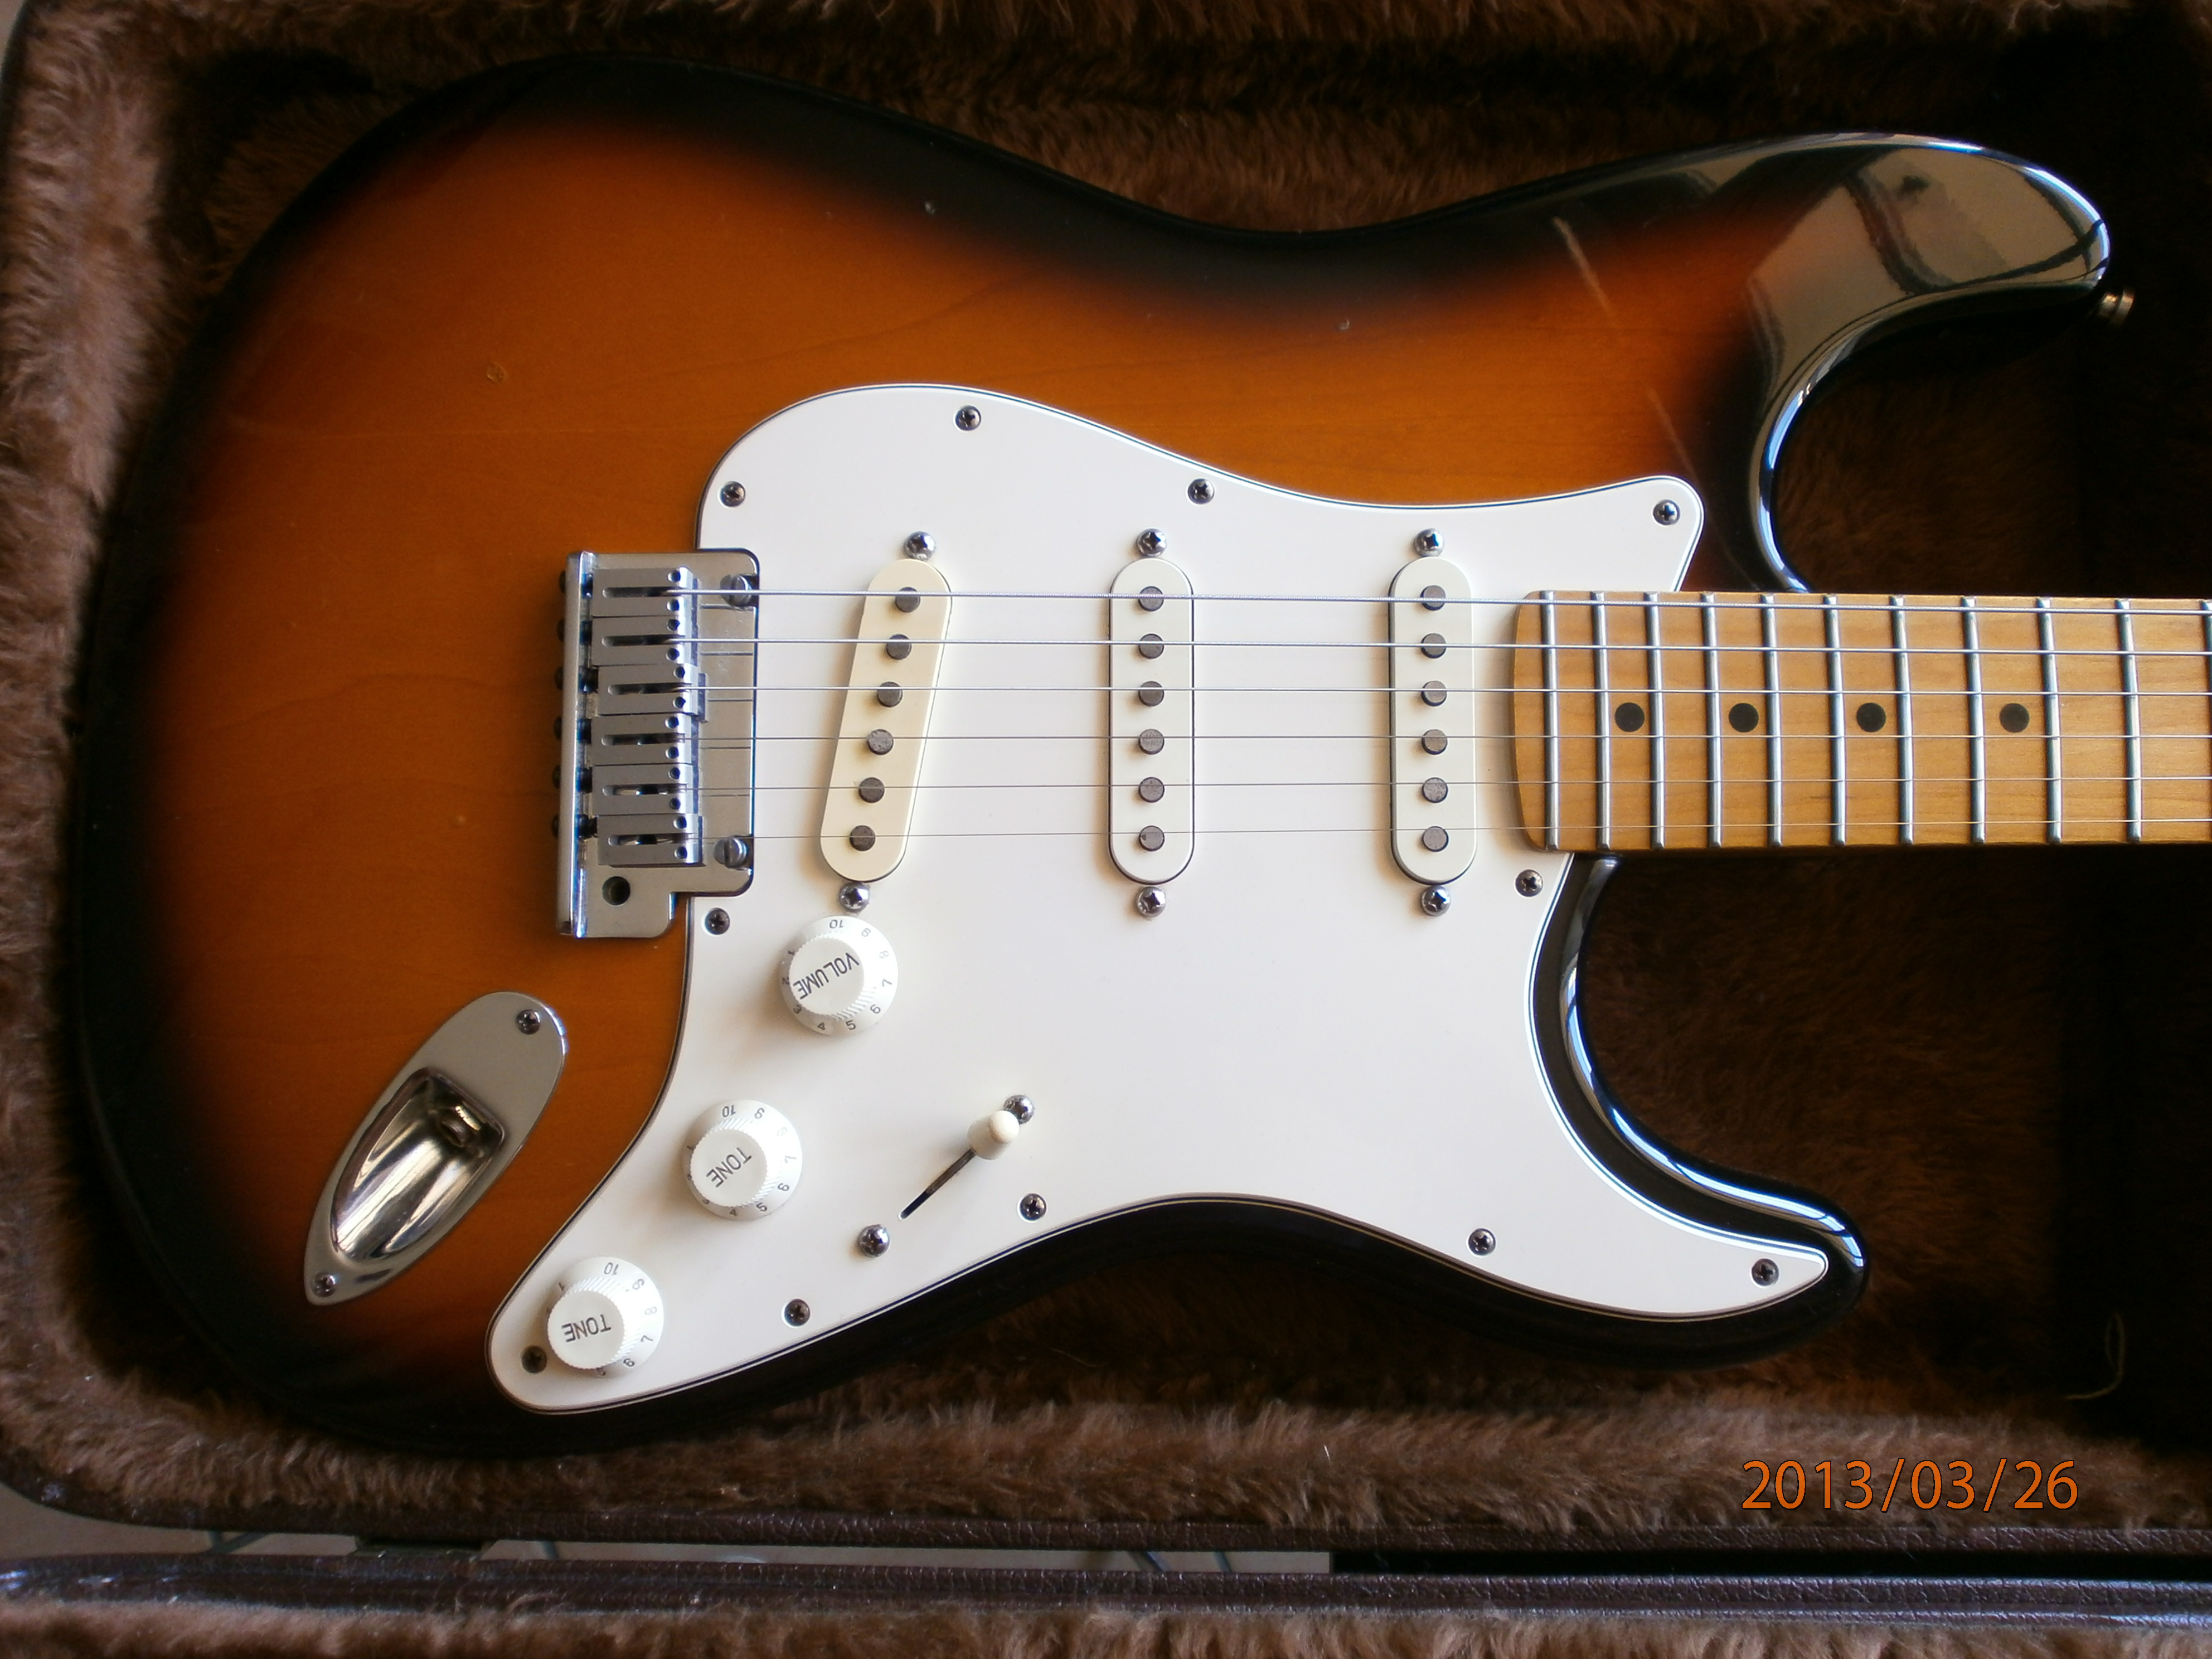 Fender American Standard Stratocaster 1986 2000 Image 608839 Audiofanzine